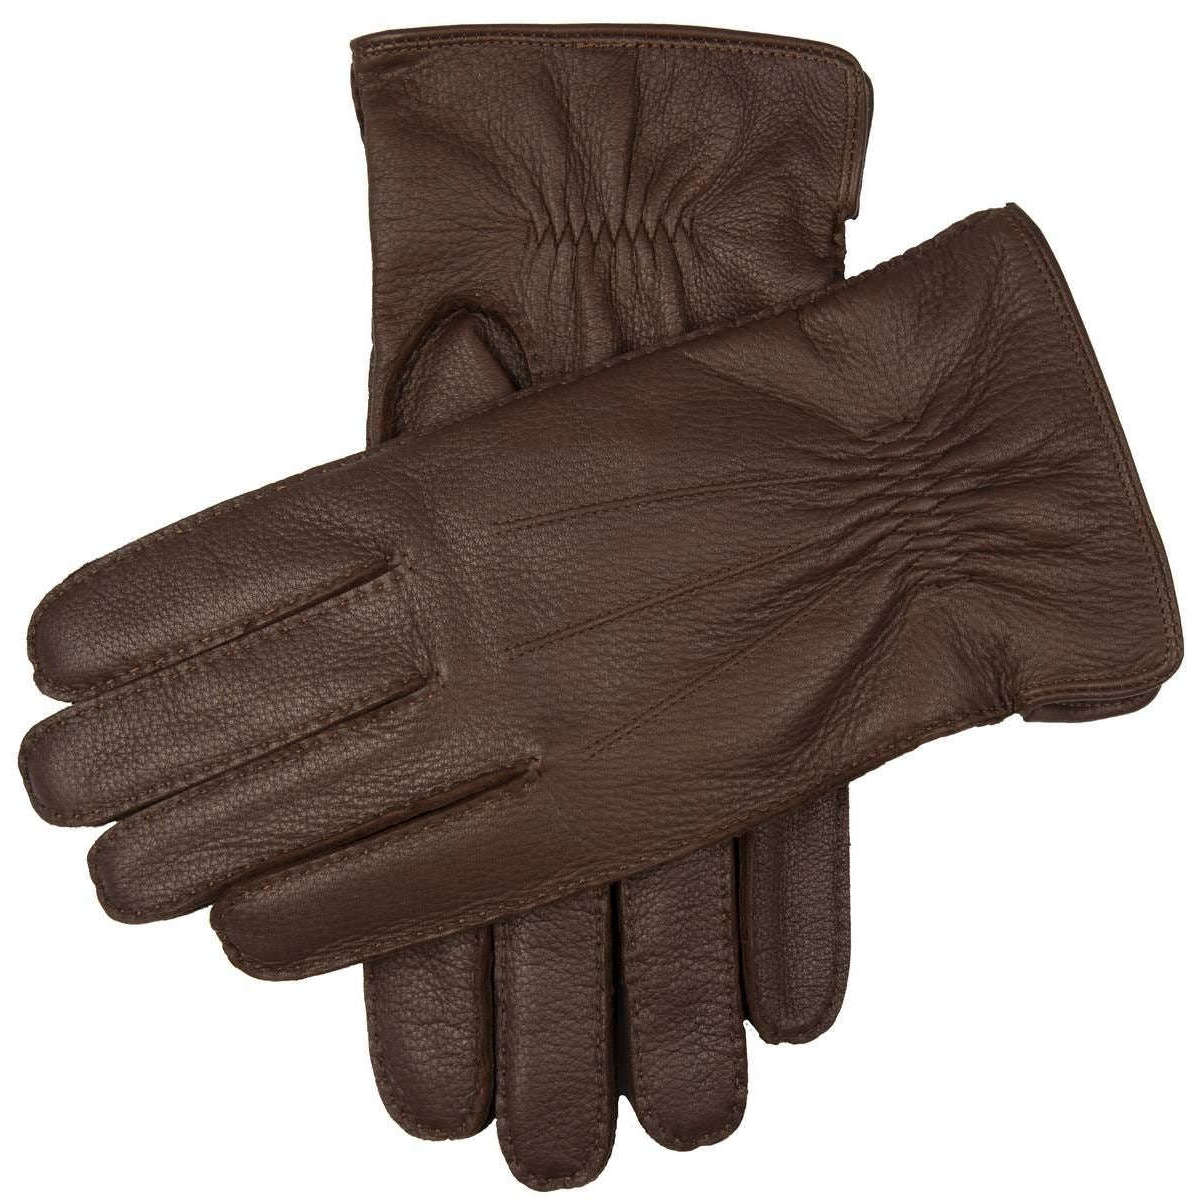 Dents Chalford Deerskin Leather Gloves - Walnut Brown - Large - 9.5-10" | 24-26cm